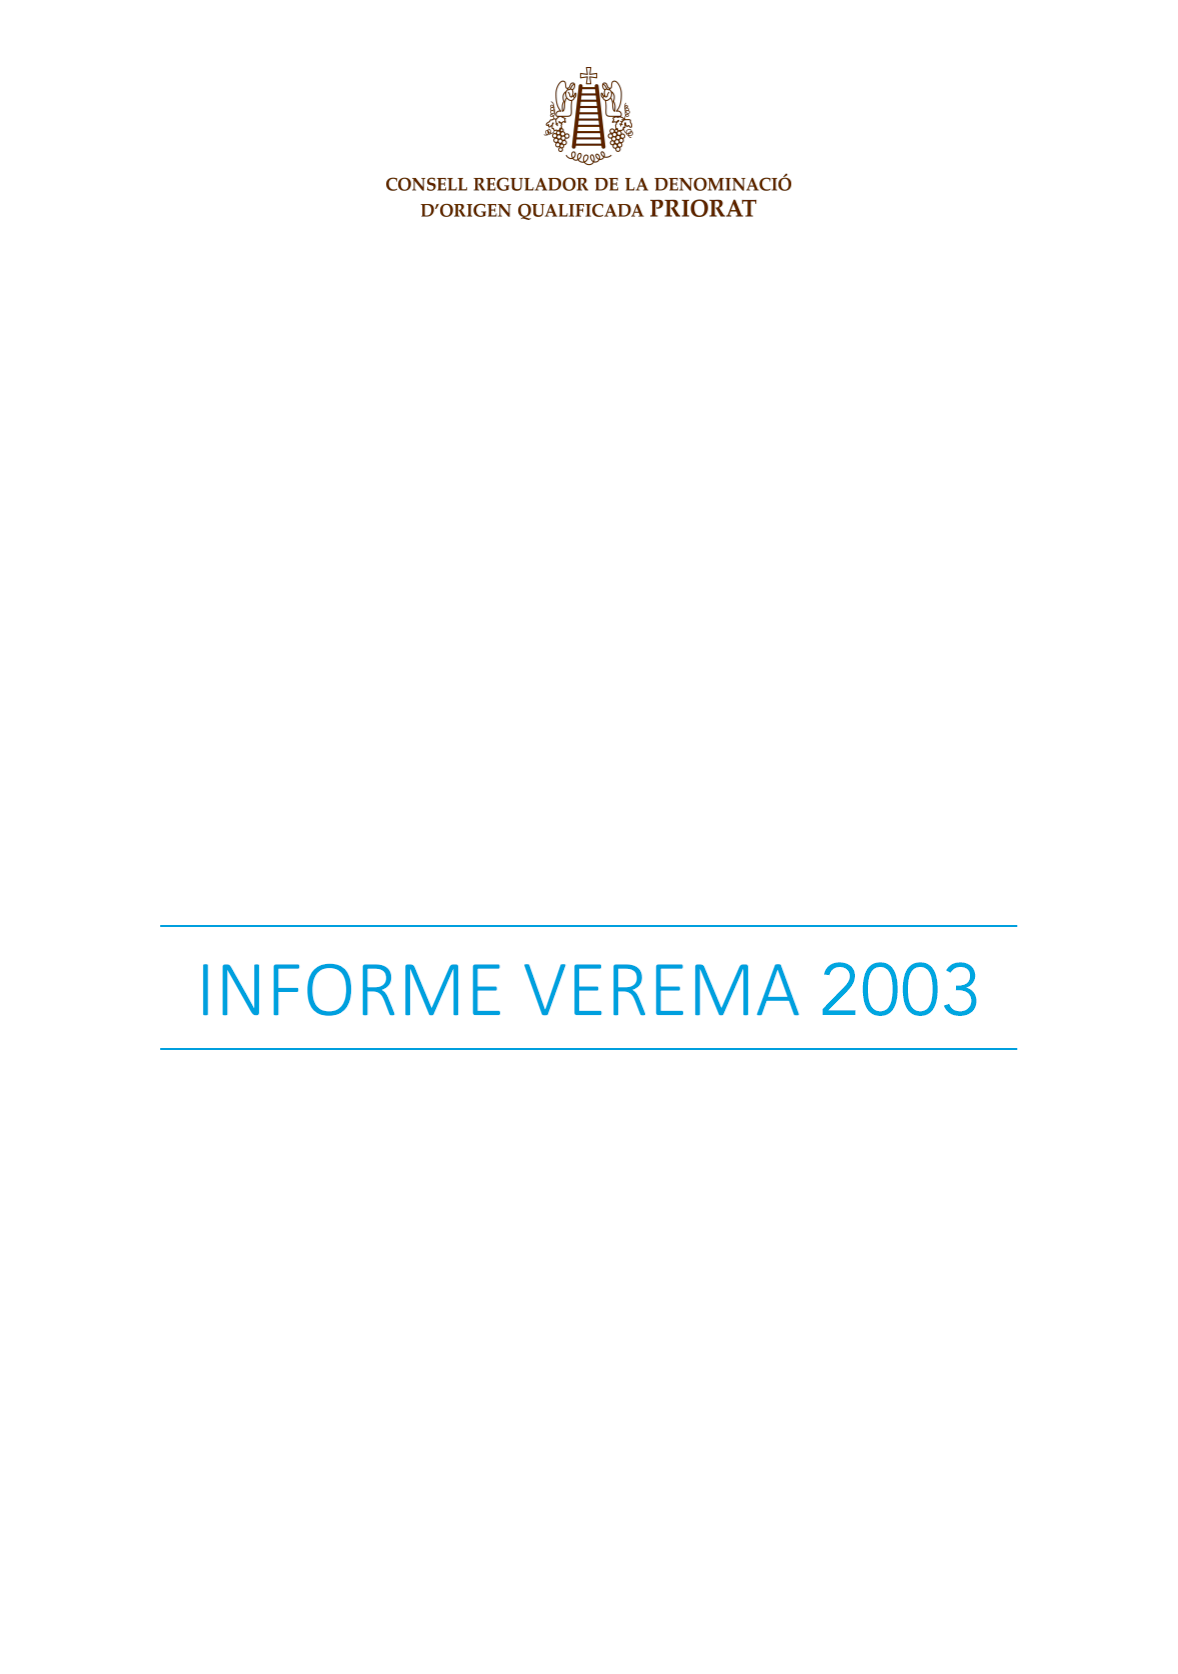 Informe de verema 2003